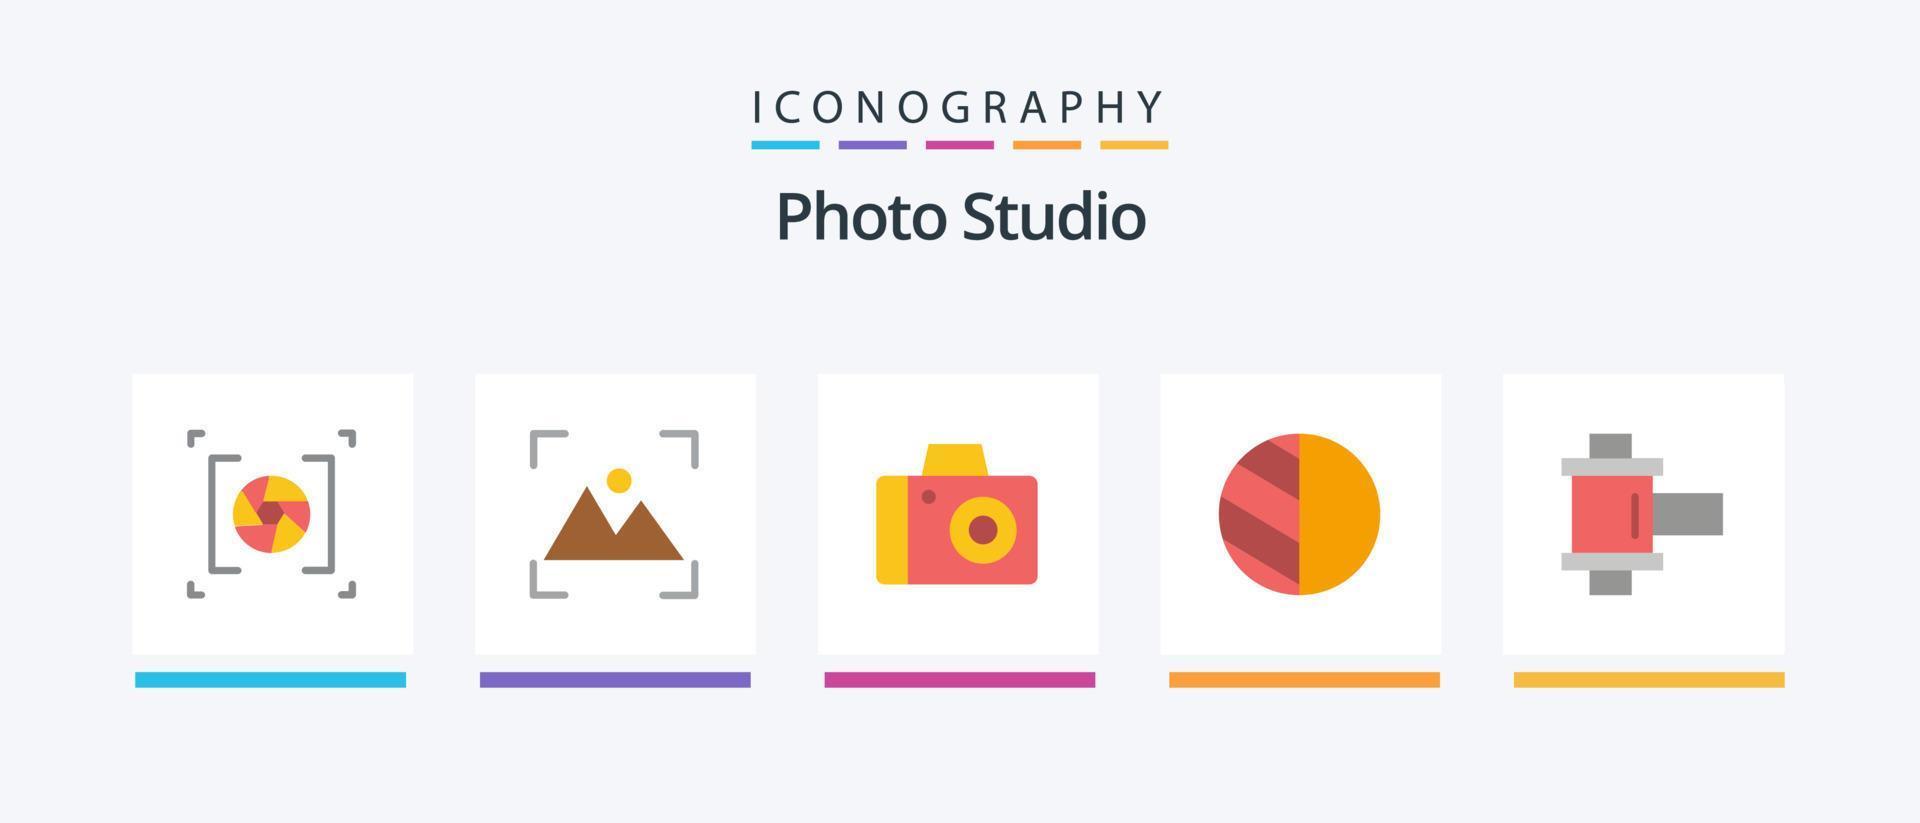 Photo Studio Flat 5 Icon Pack Including . photo. camera. film. photo. Creative Icons Design vector